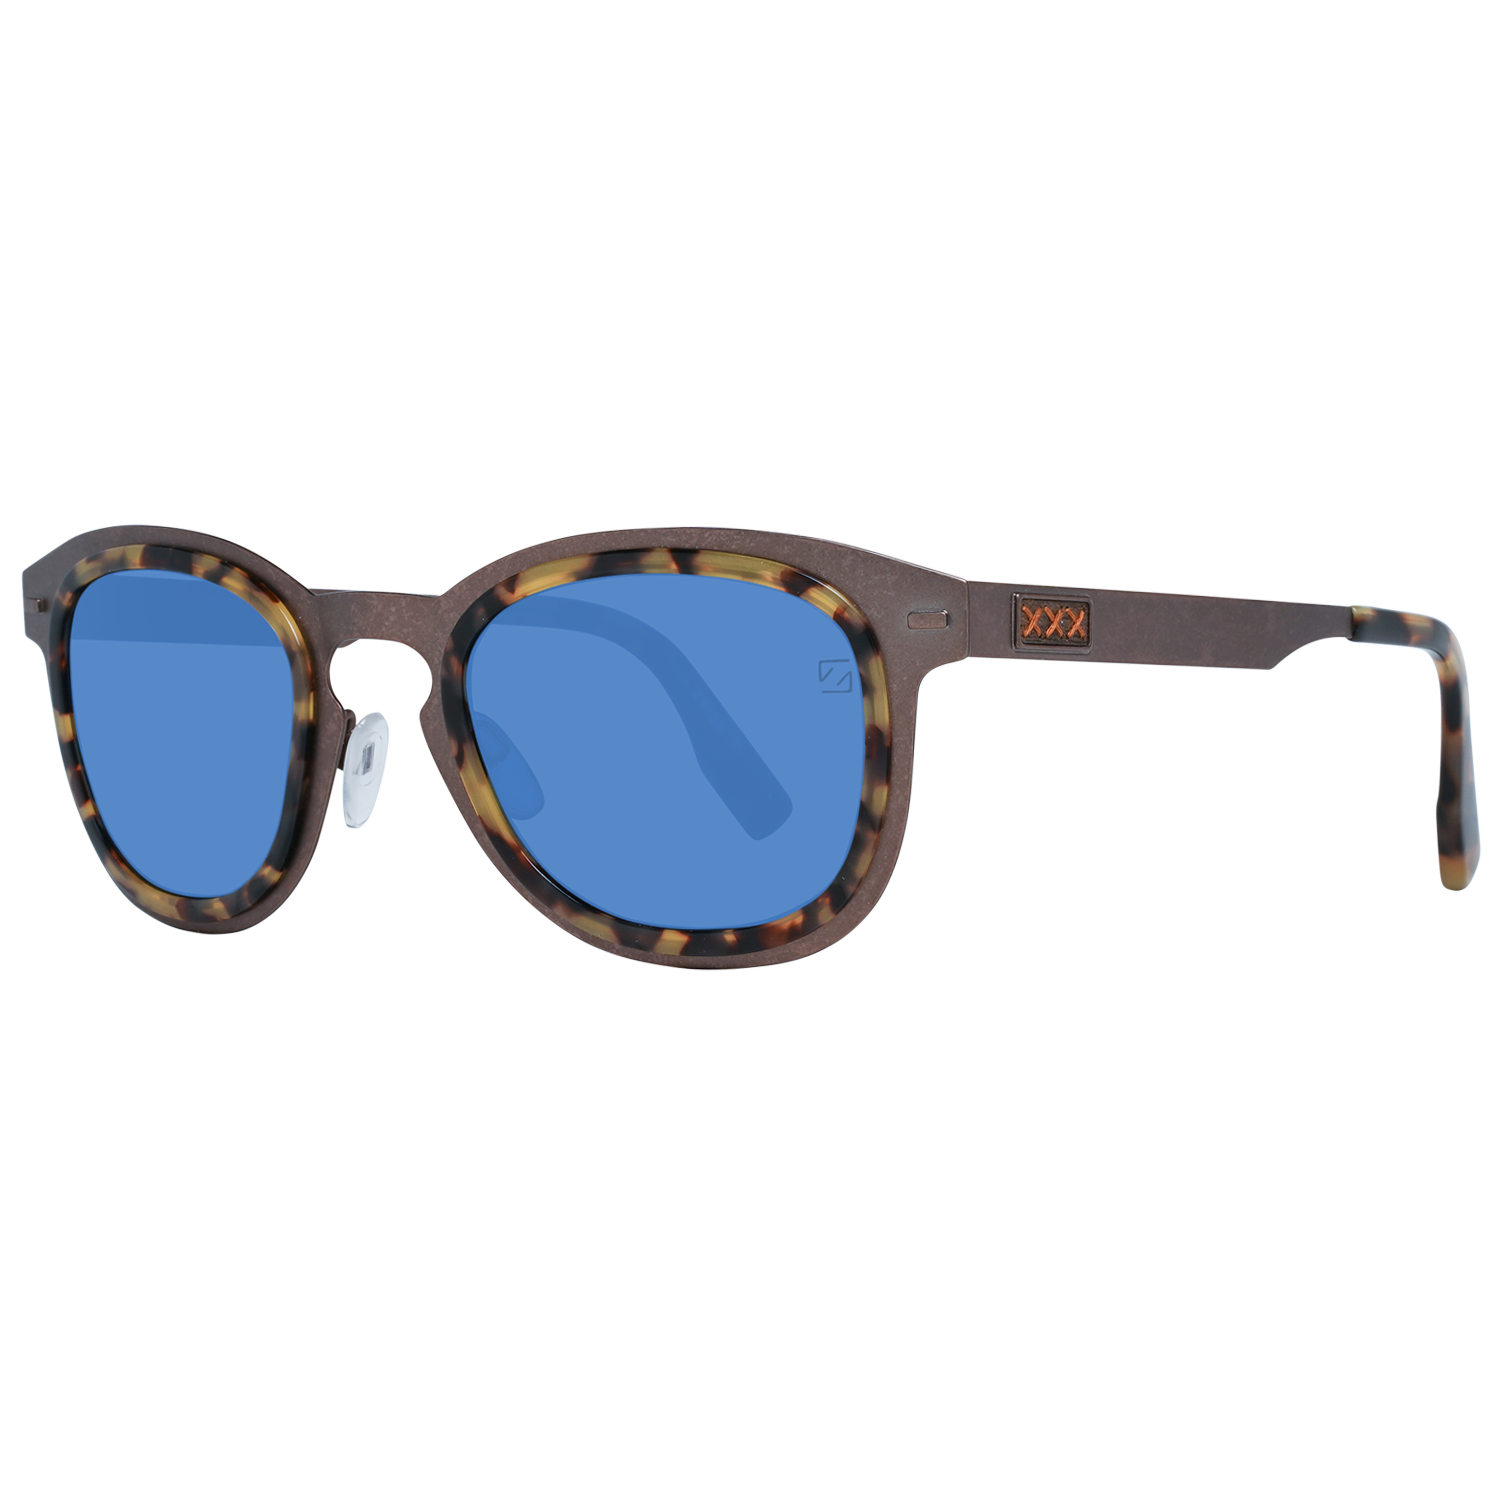 Zegna Couture Sunglasses Zegna Couture Sunglasses ZC0007 50 38V Titanium Eyeglasses Eyewear UK USA Australia 